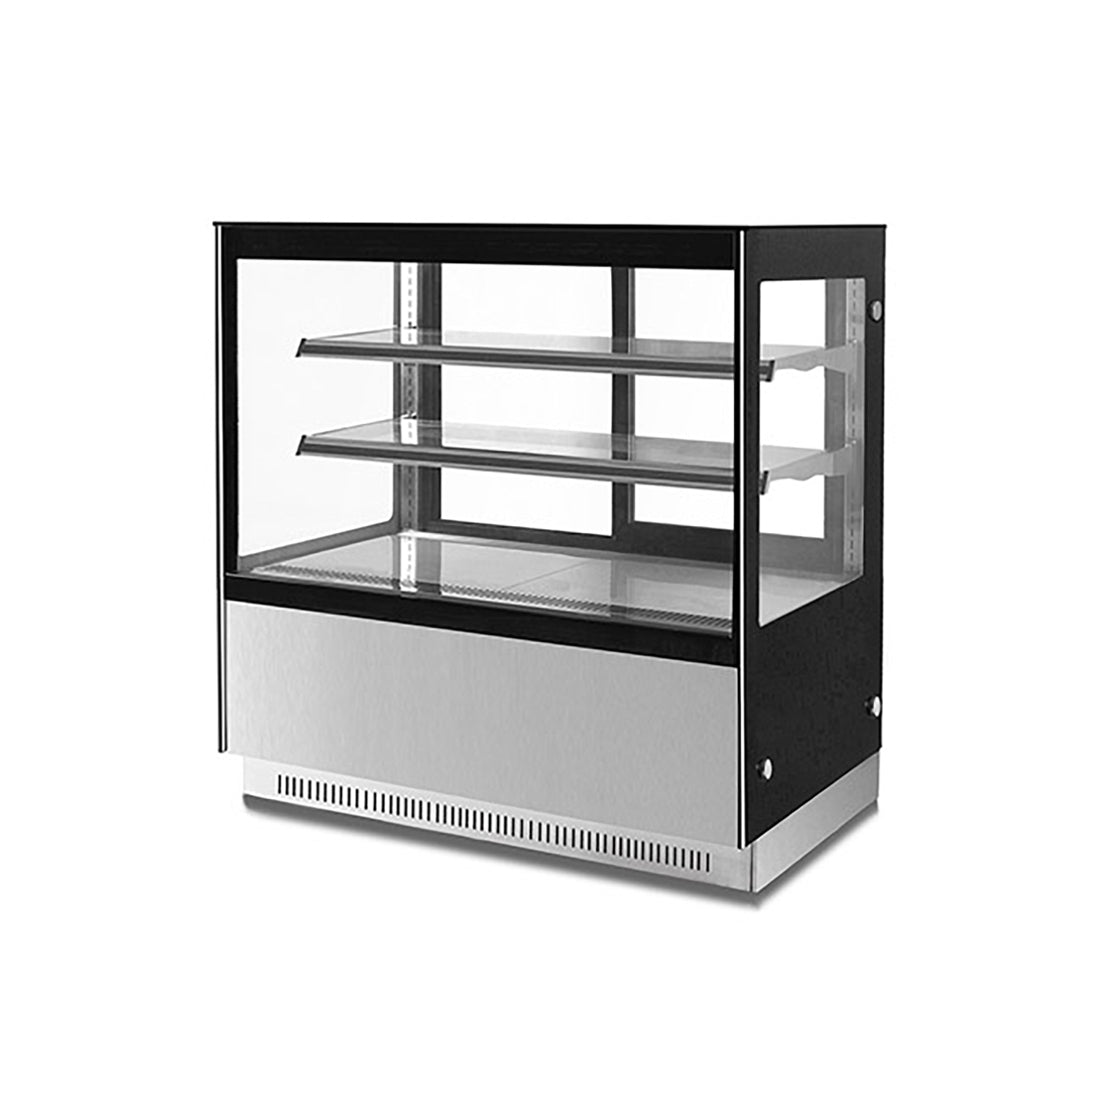 Modern 2 Shelves Cake or Food Display - GN-1200RF2  - Bonvue